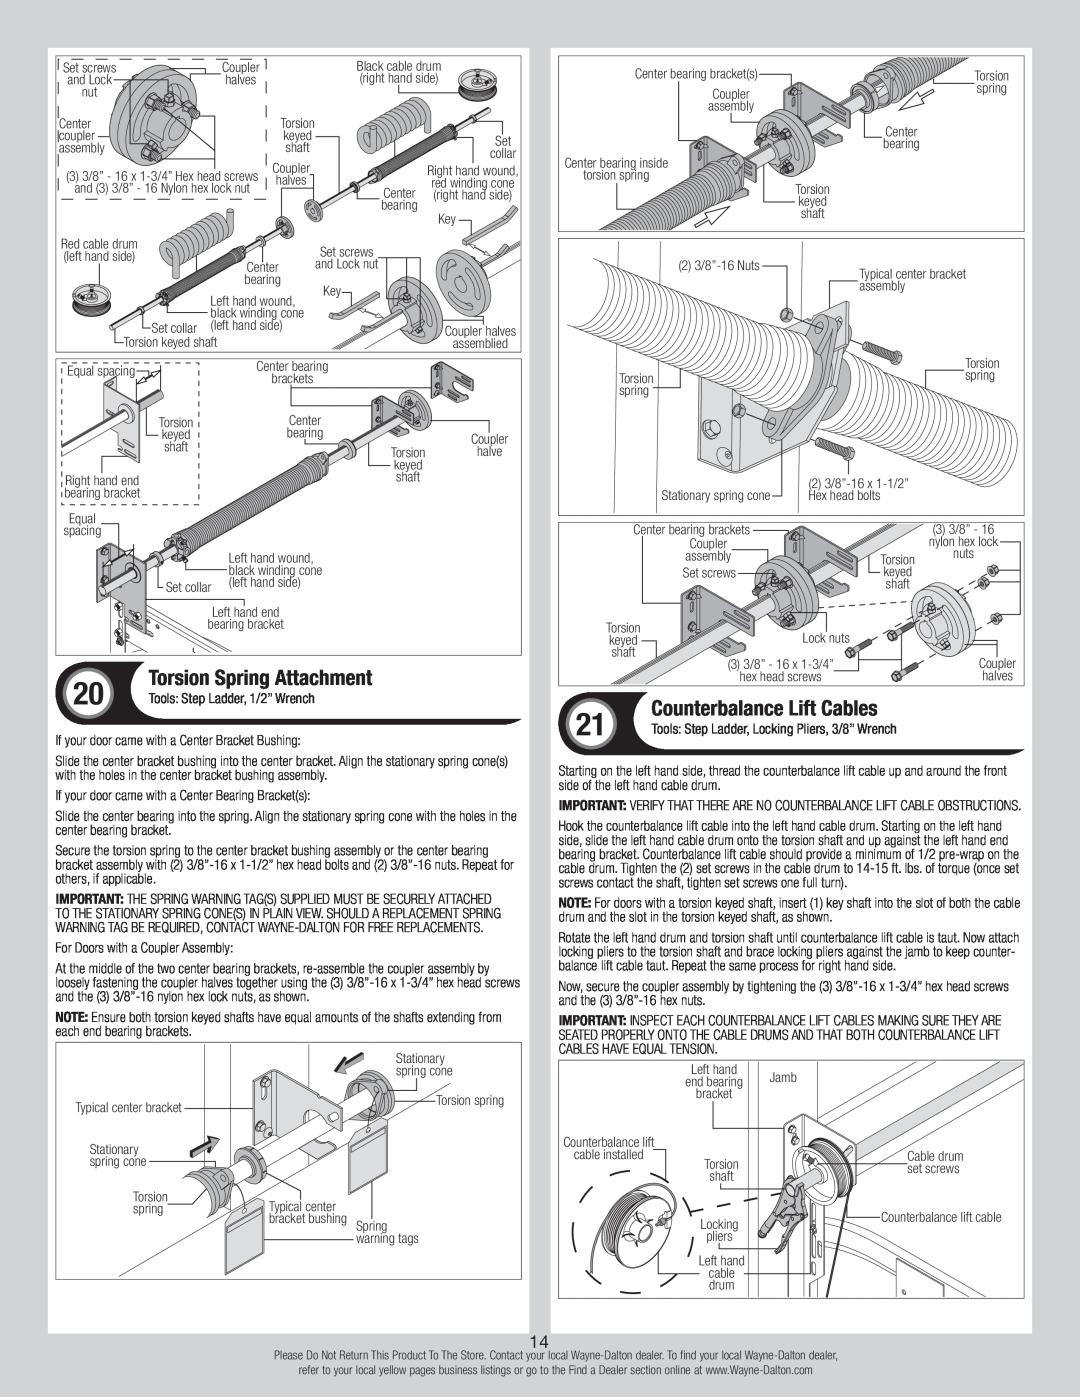 Wayne-Dalton 44 installation instructions Counterbalance Lift Cables, Torsion Spring Attachment 